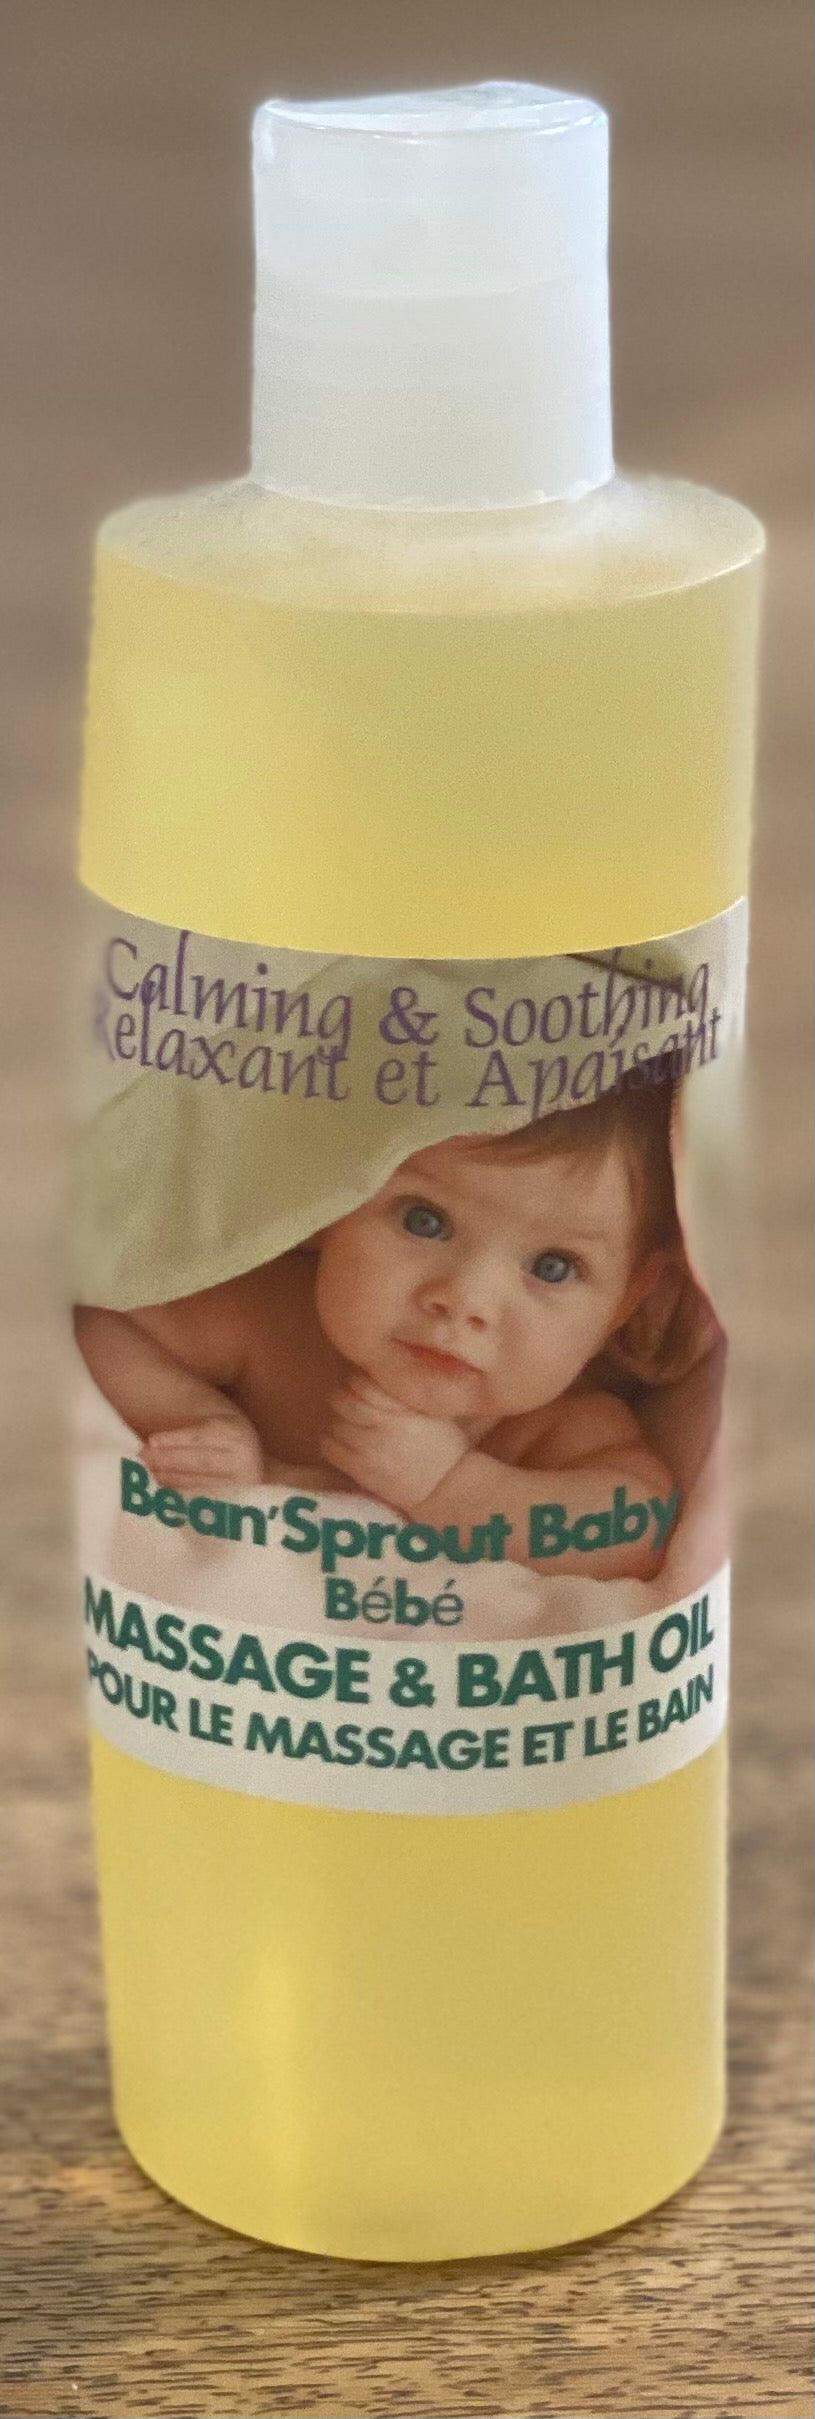 Bean'Sprout Baby Massage & Bath Oil